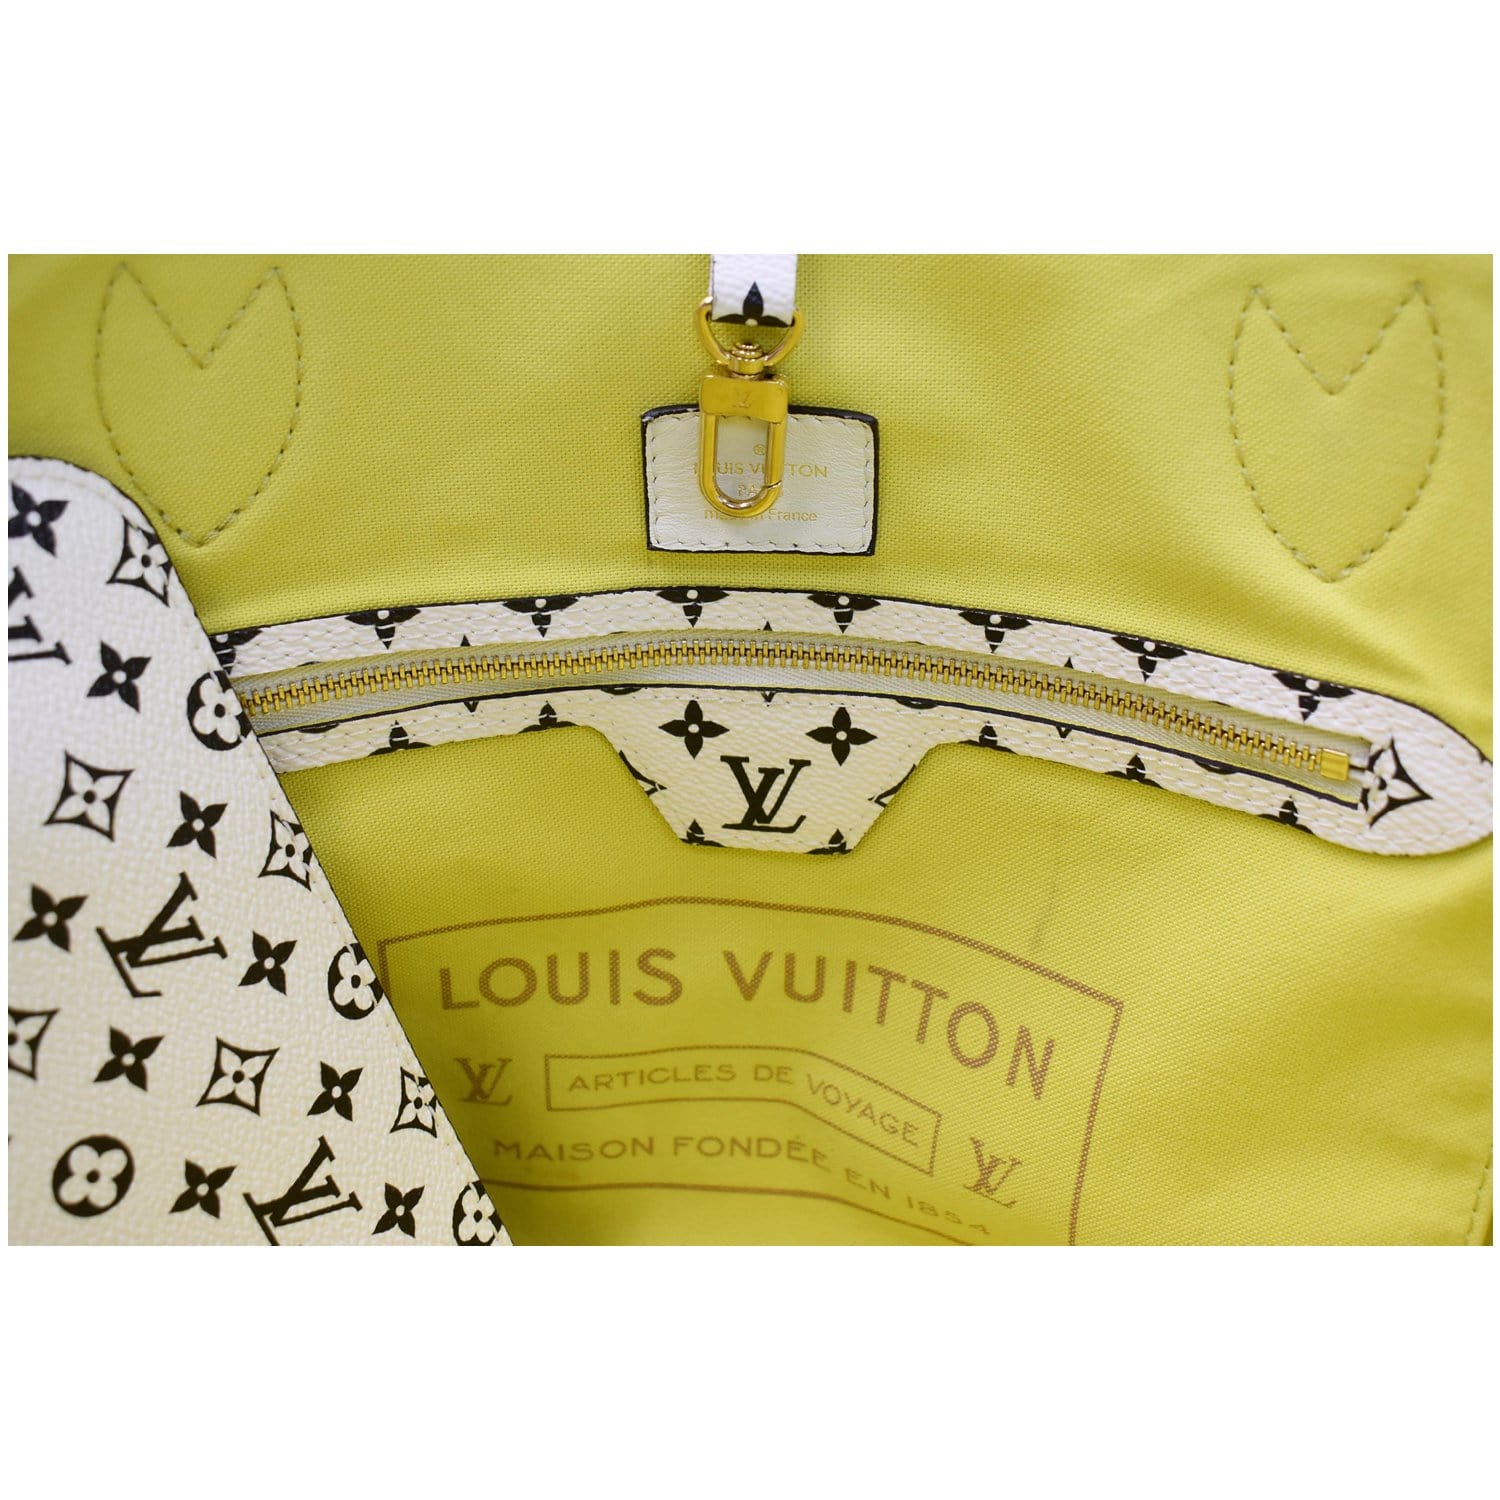 LOUIS VUITTON Neverfull MM Giant Monogram Shoulder Bag Green M44568